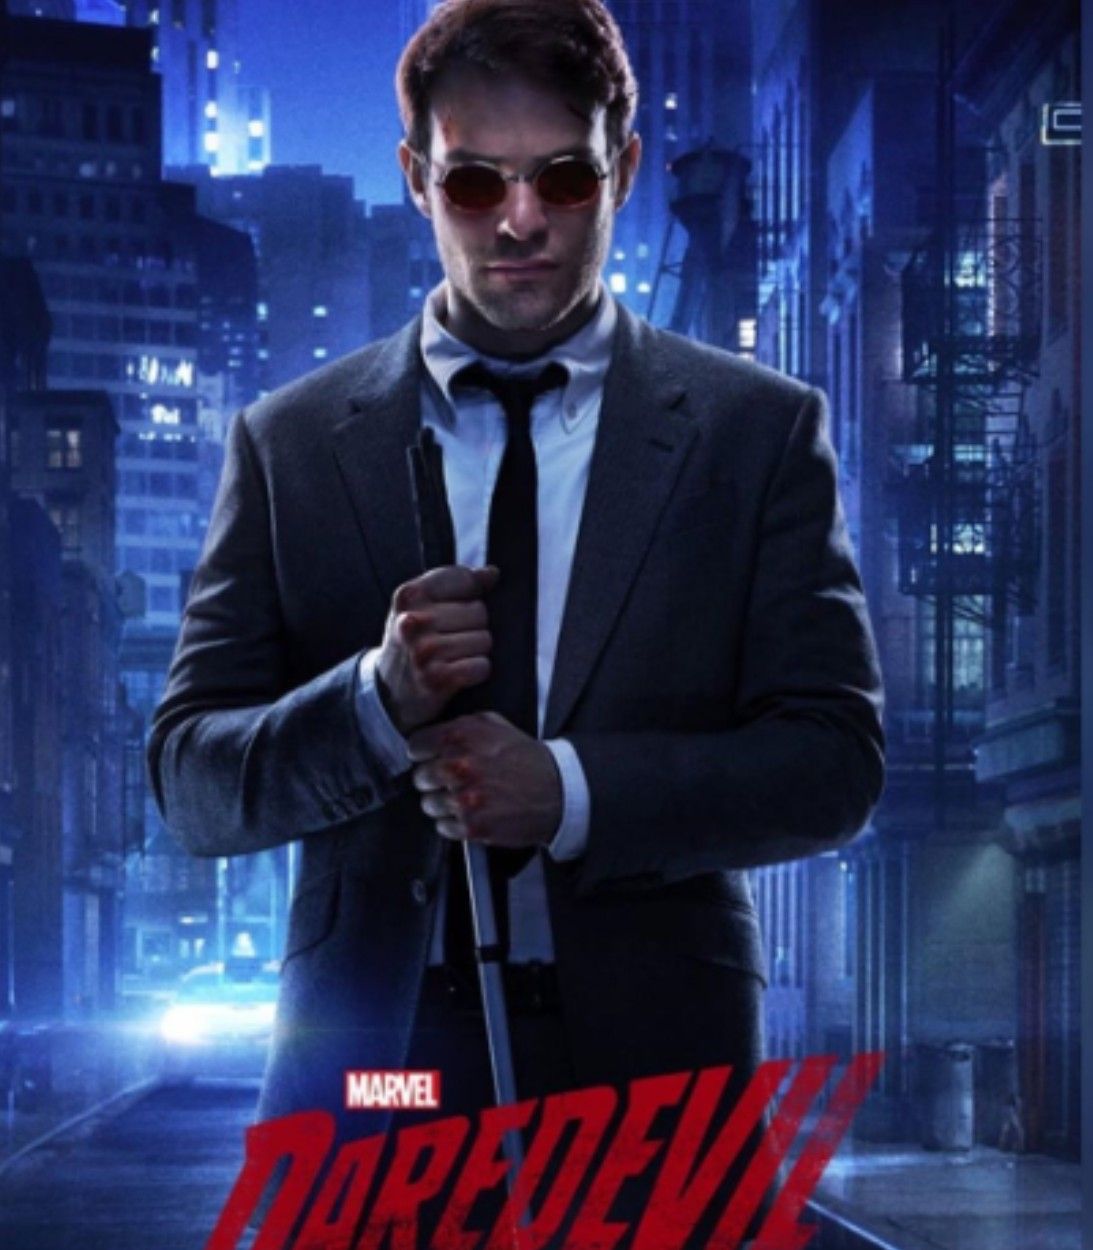 Netflix’s Daredevil Poster As Marvel Comic Book Art Is Stunning original